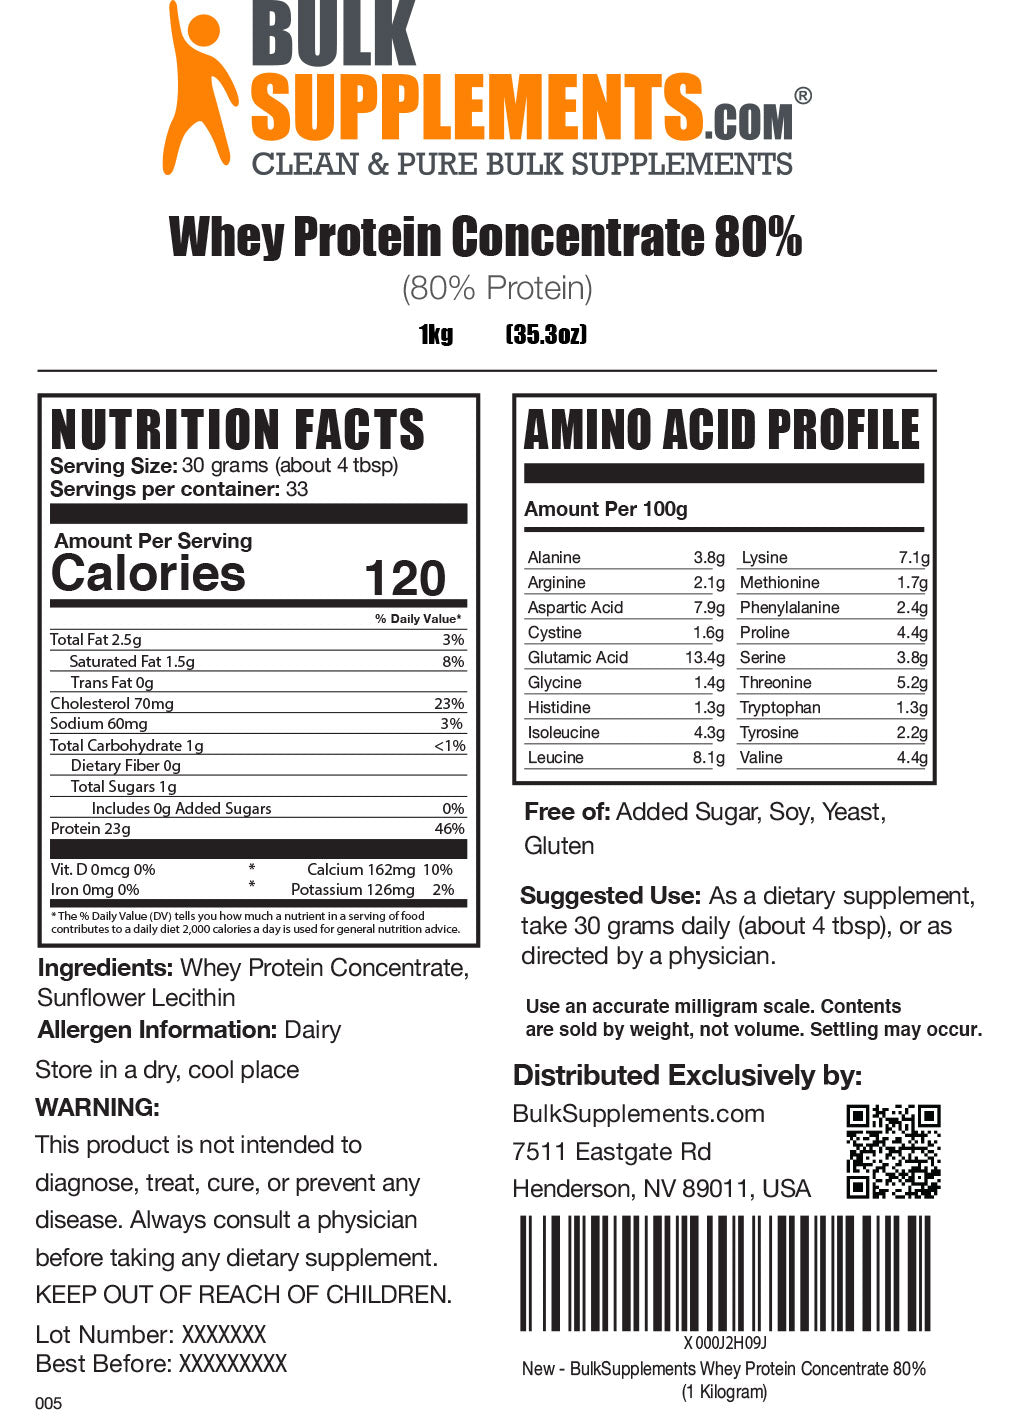 Whey protein isolate powder label 1kg